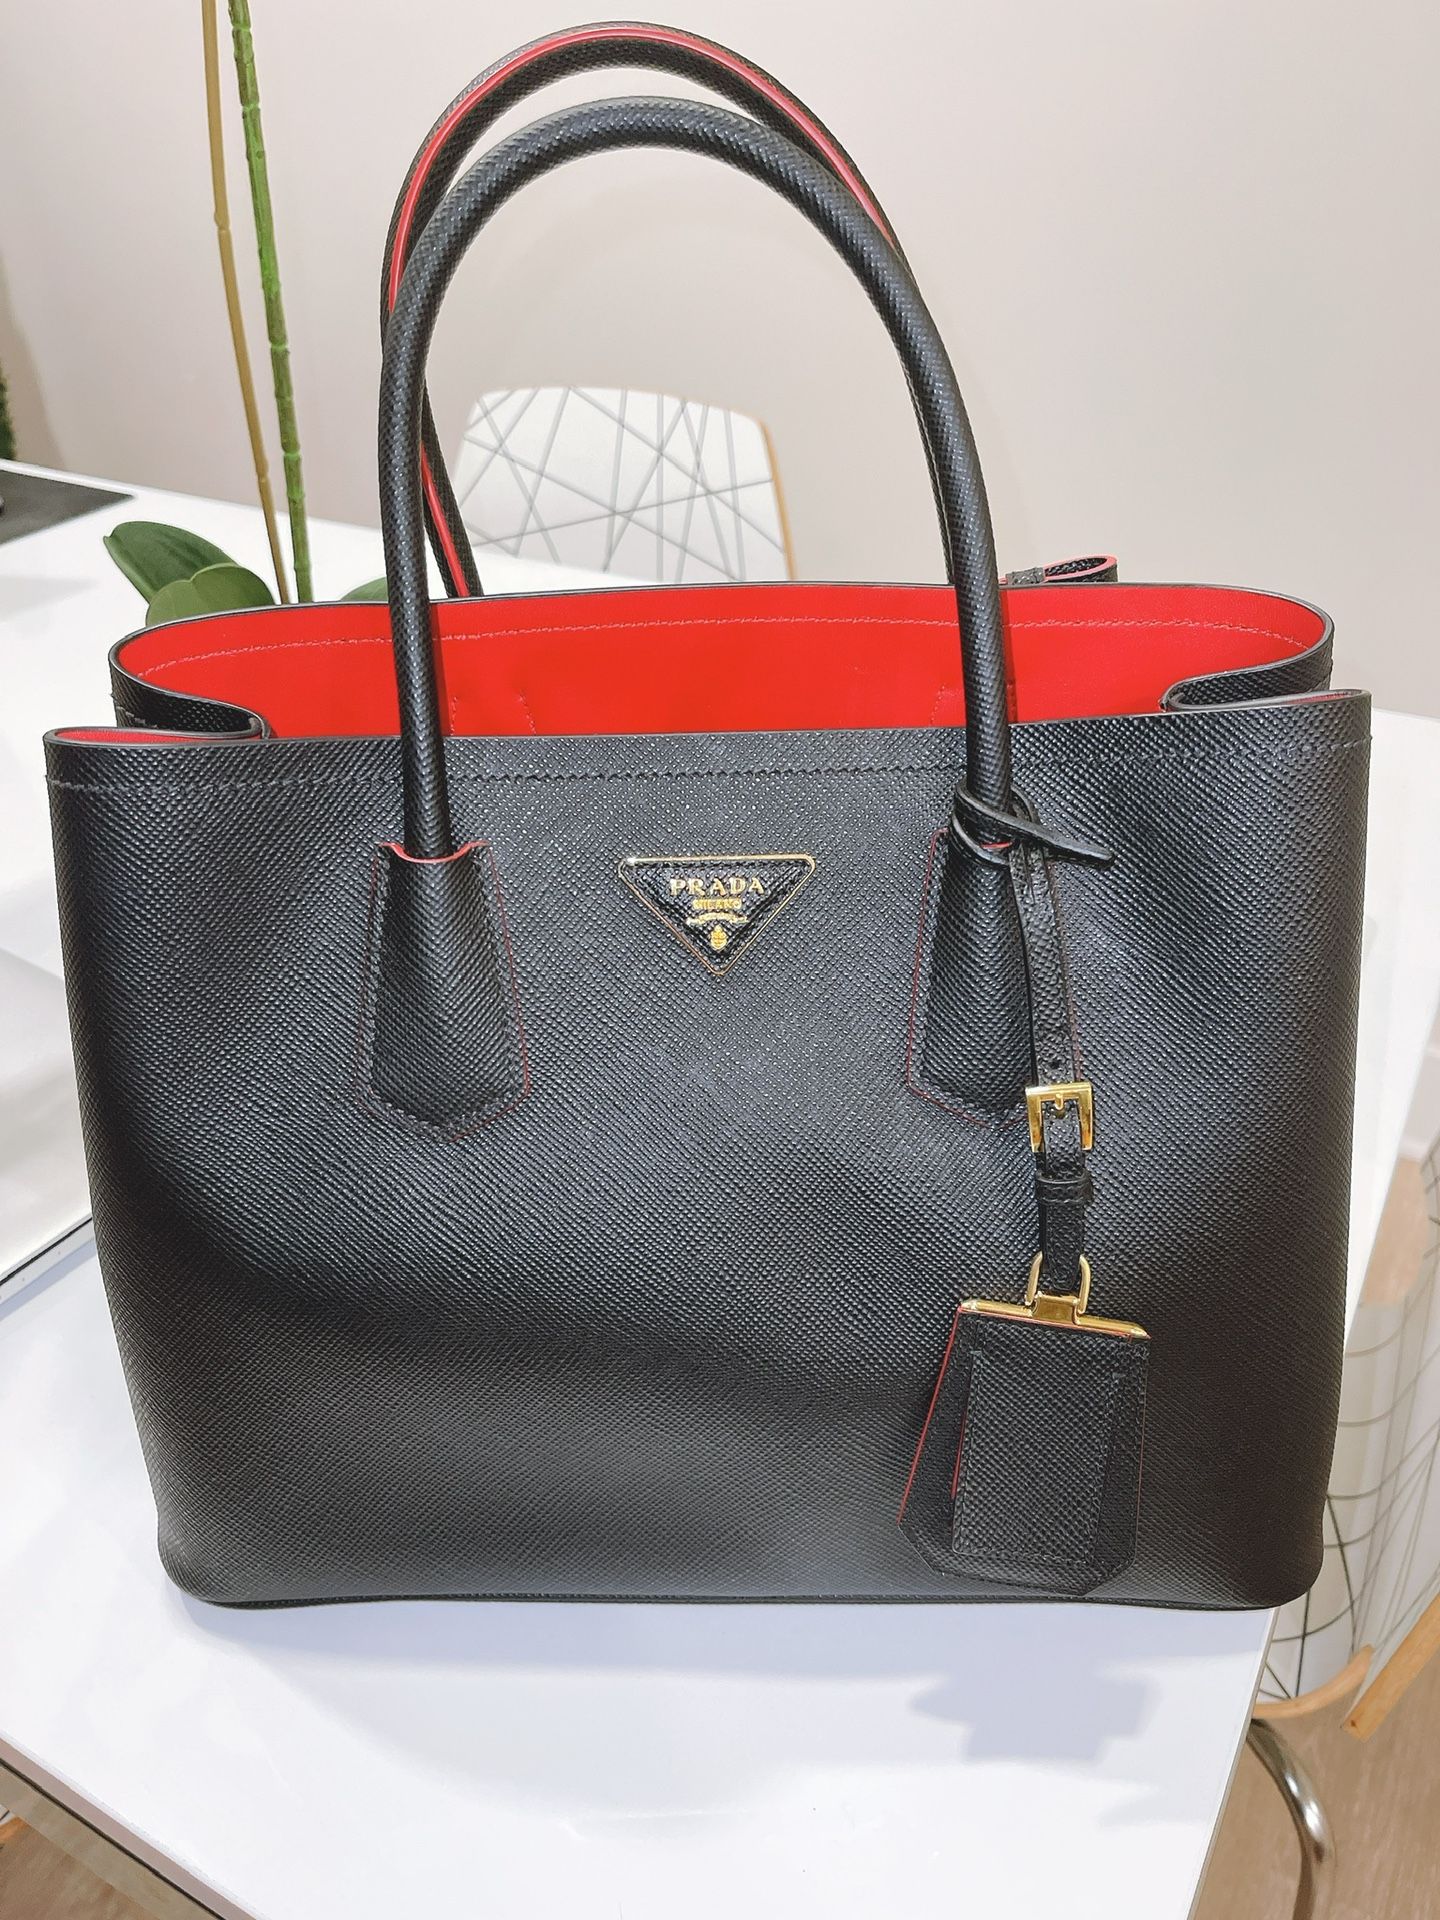 New Prada Medium Saffiano Double Leather Bag Purse